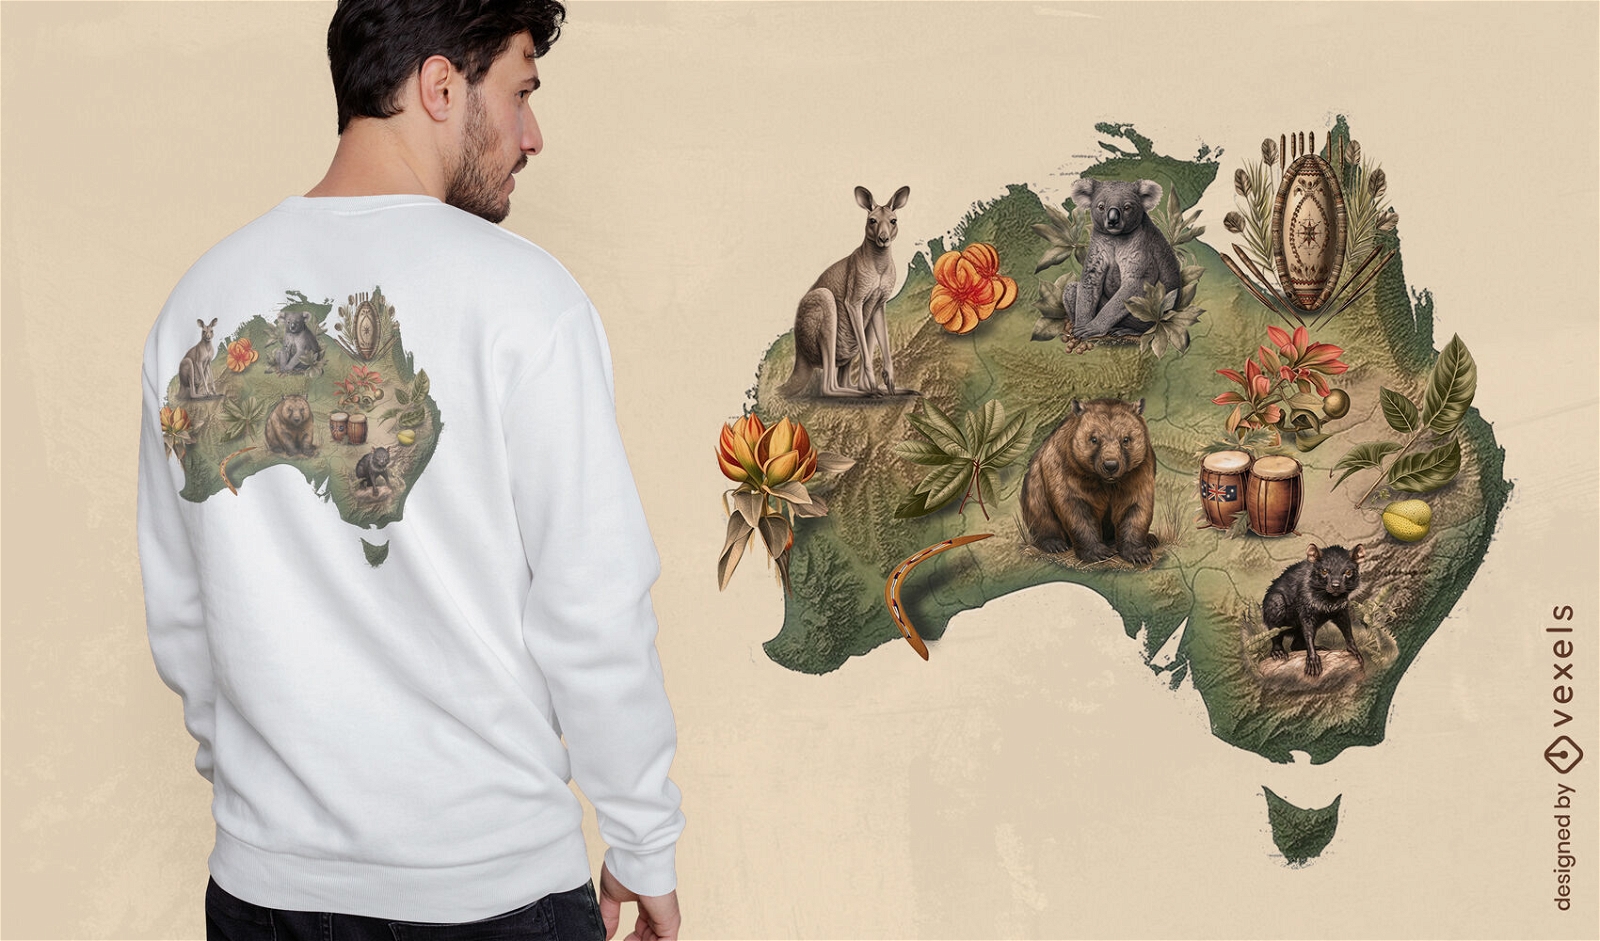 Dise?o de camiseta de vida silvestre australiana.